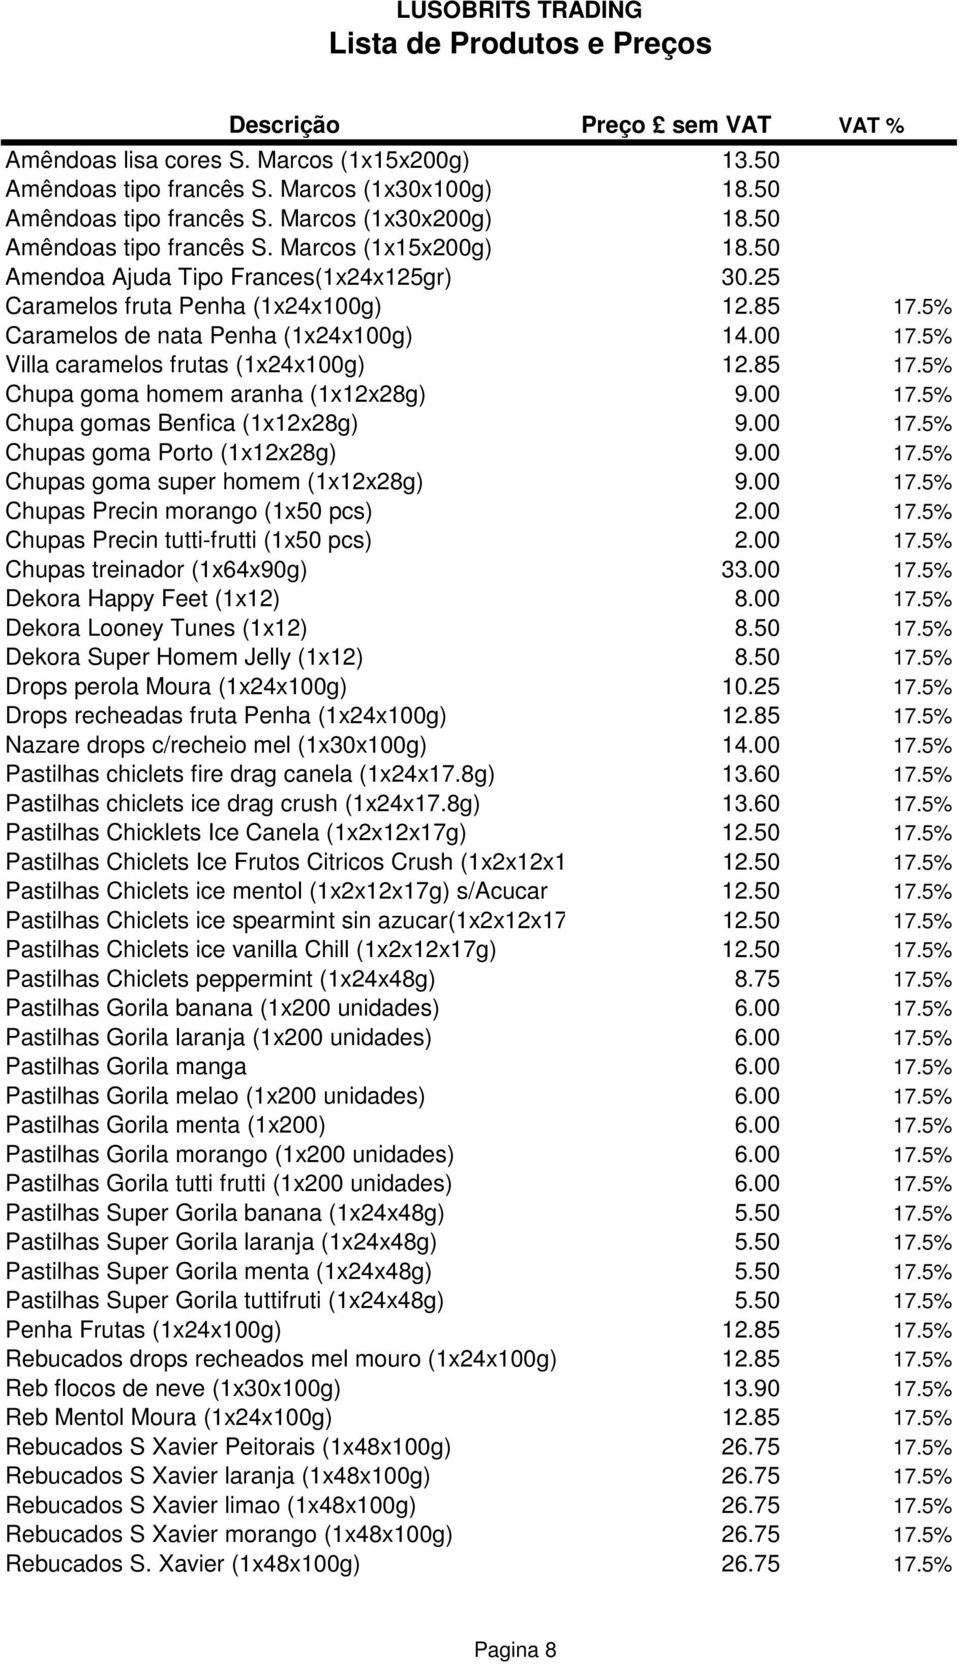 00 17.5% Chupa gomas Benfica (1x12x28g) 9.00 17.5% Chupas goma Porto (1x12x28g) 9.00 17.5% Chupas goma super homem (1x12x28g) 9.00 17.5% Chupas Precin morango (1x50 pcs) 2.00 17.5% Chupas Precin tutti-frutti (1x50 pcs) 2.